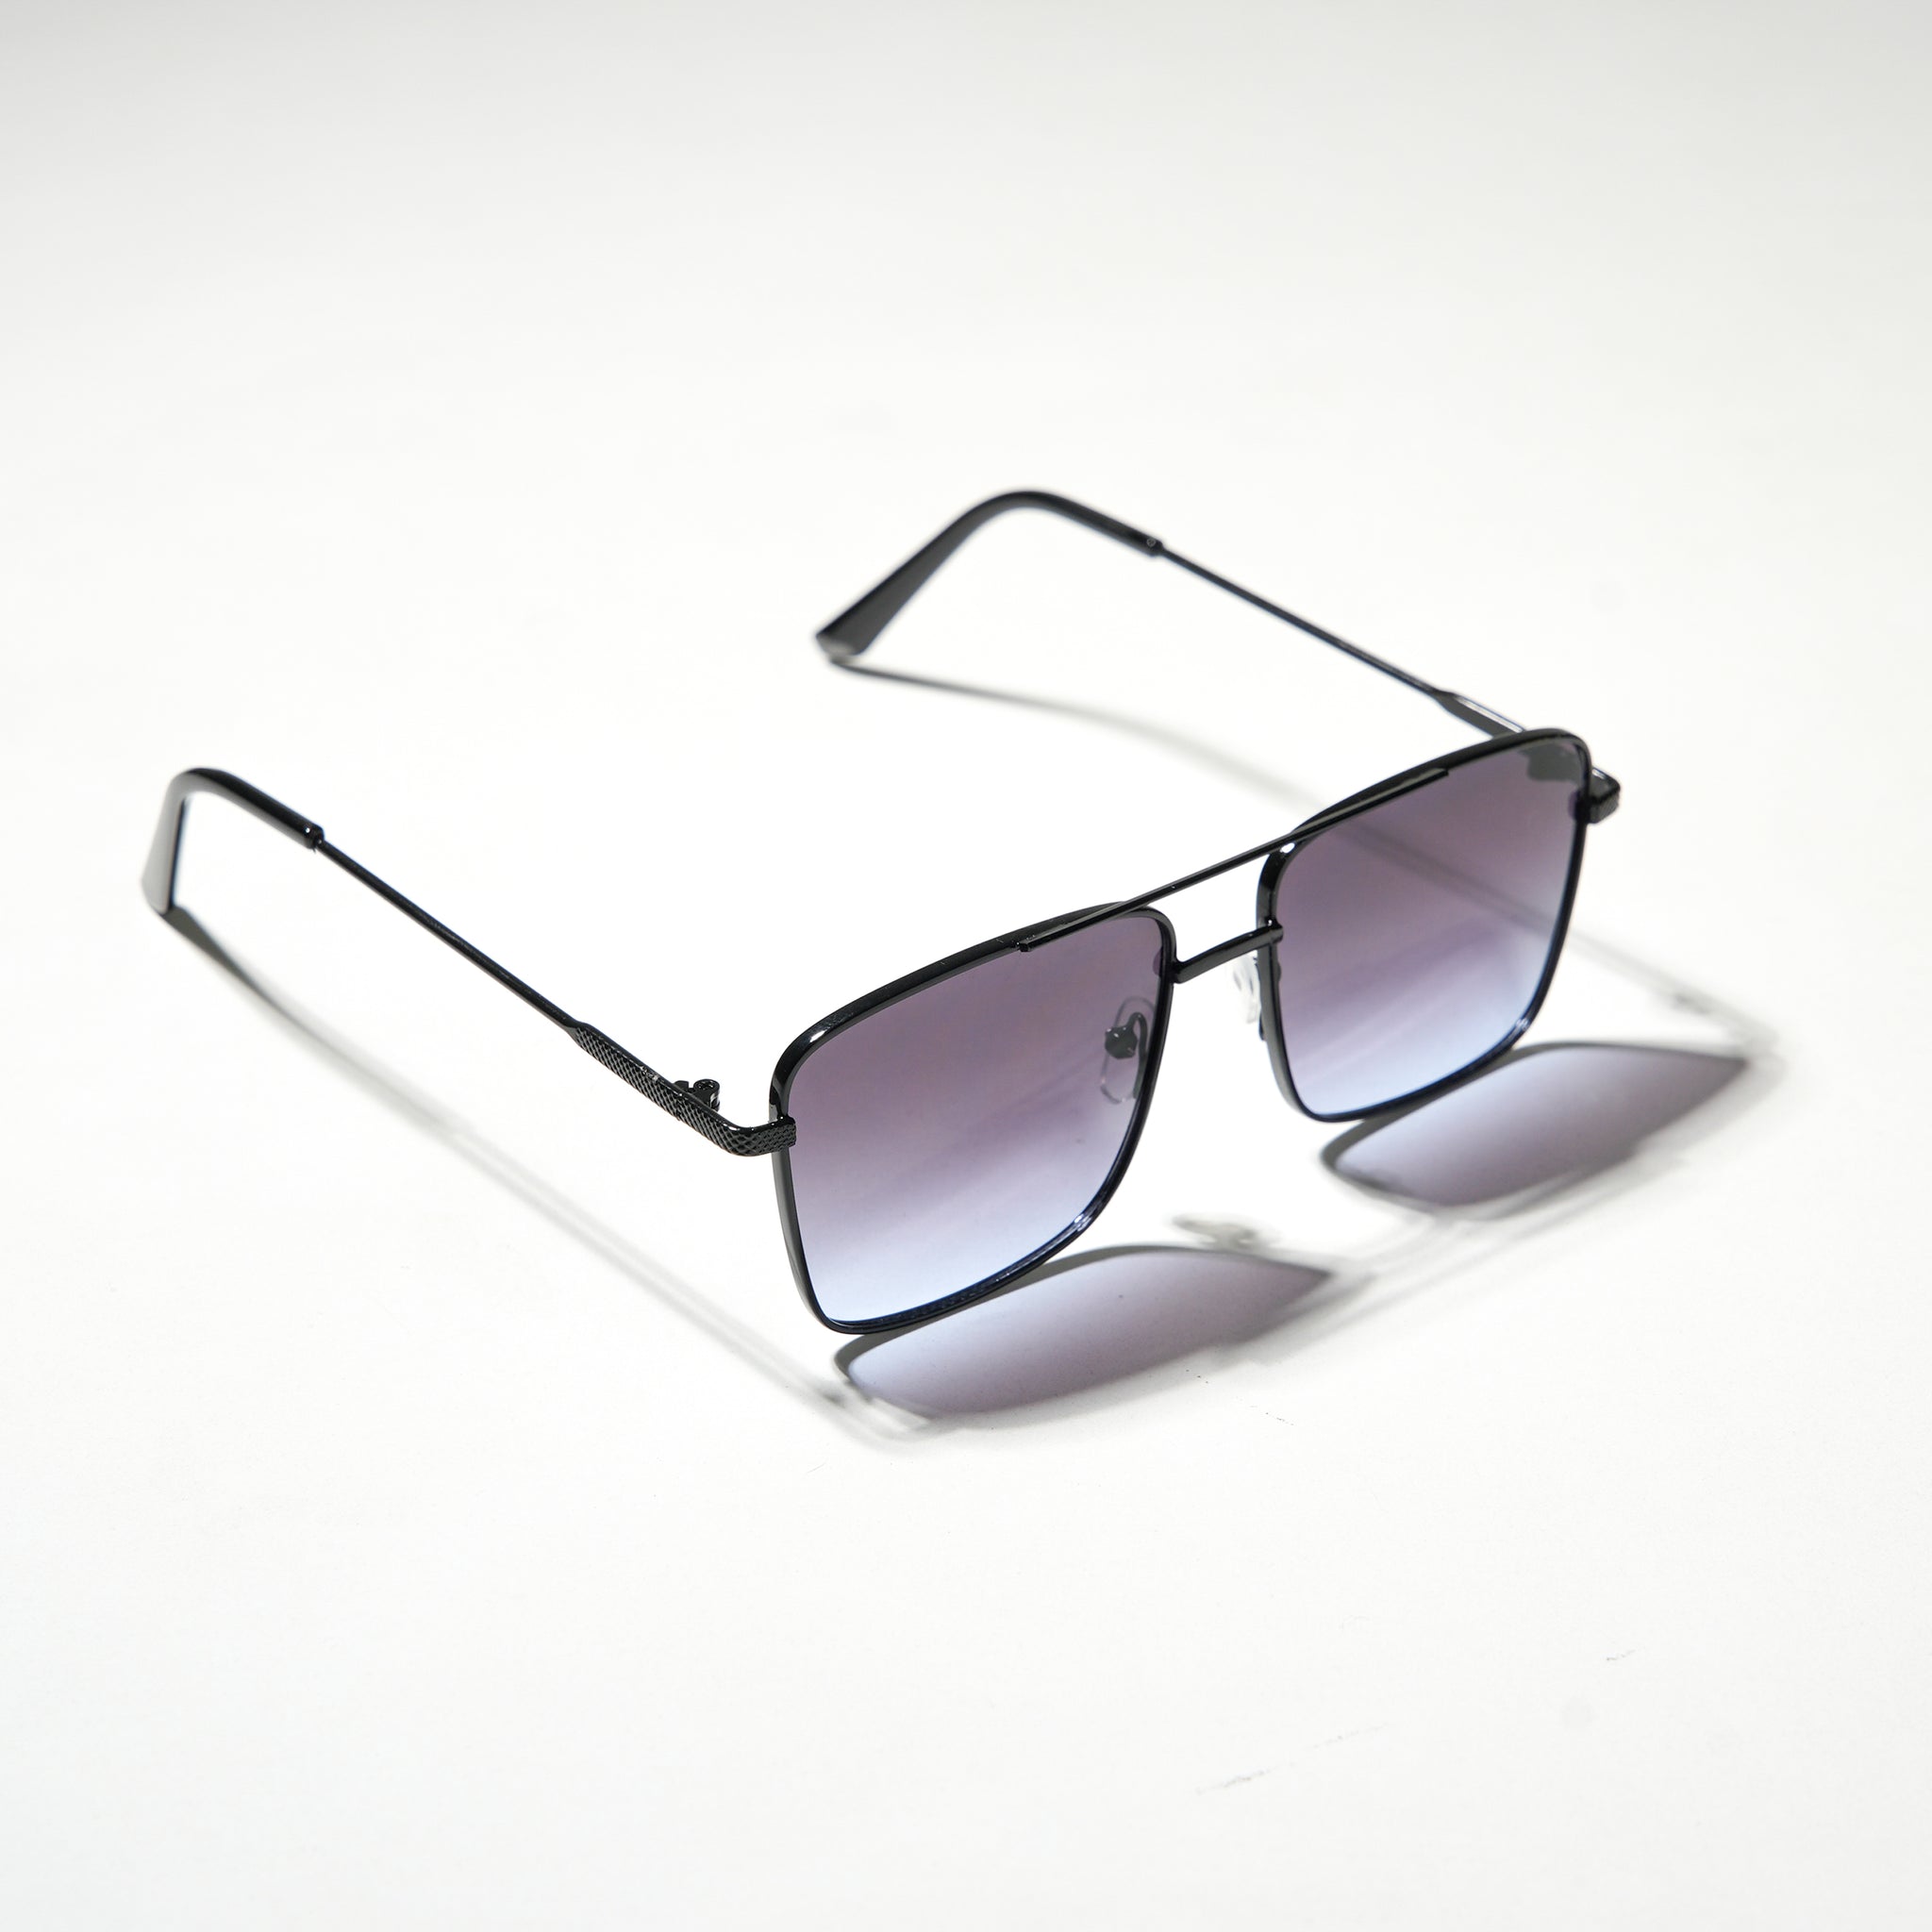 Chokore Classic Square Metal Sunglasses with Double Bridge (Black)